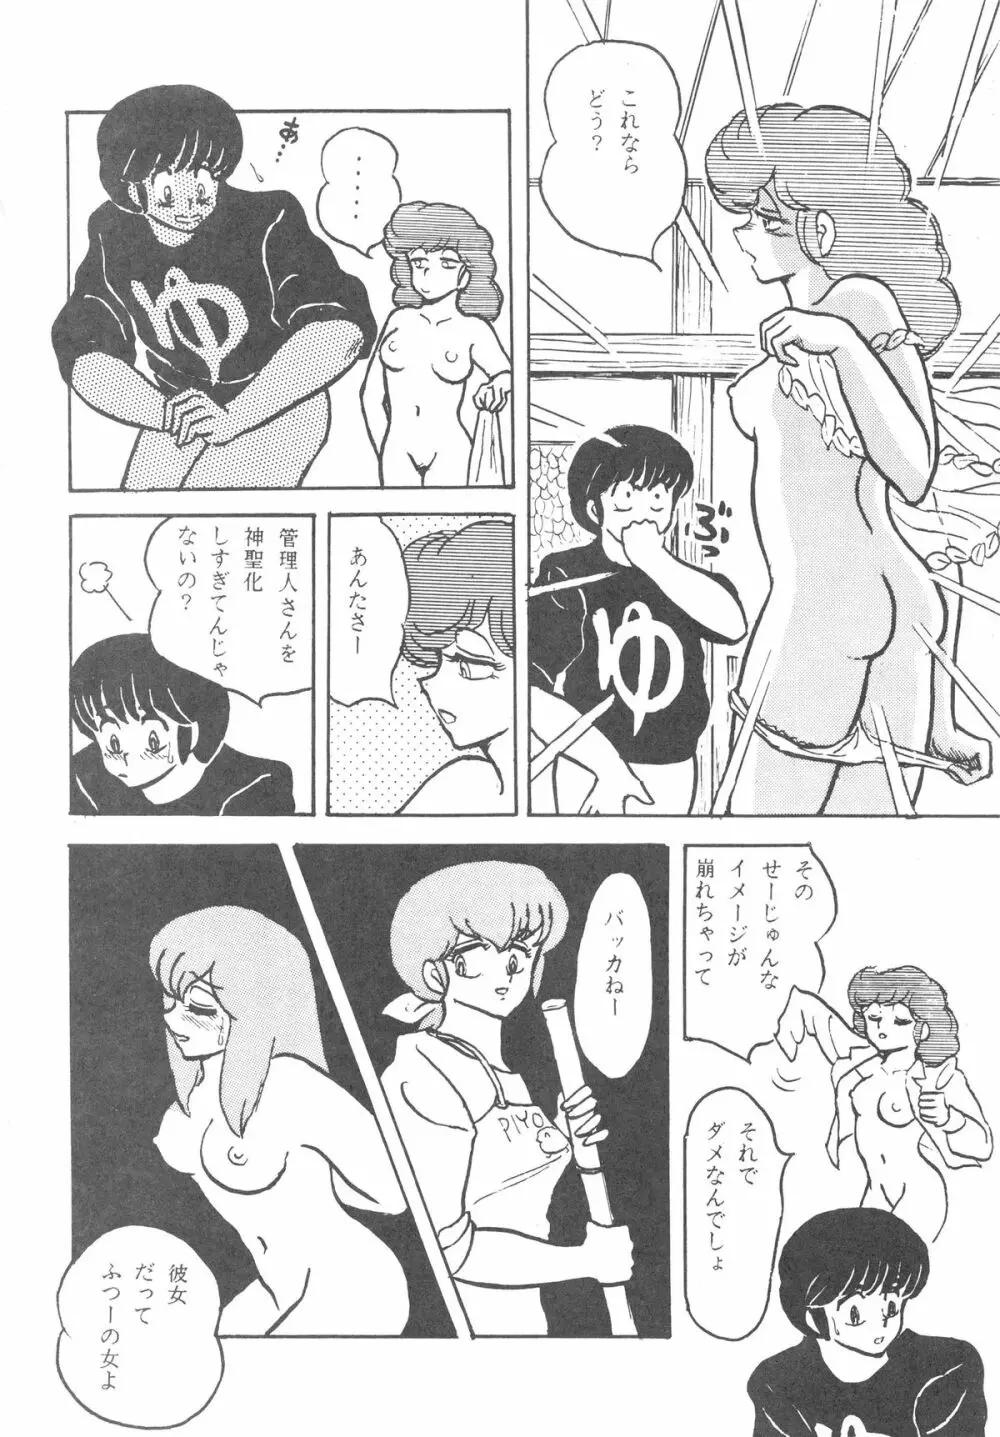 MIBOJIN GESHUKU 1 & 2 56ページ